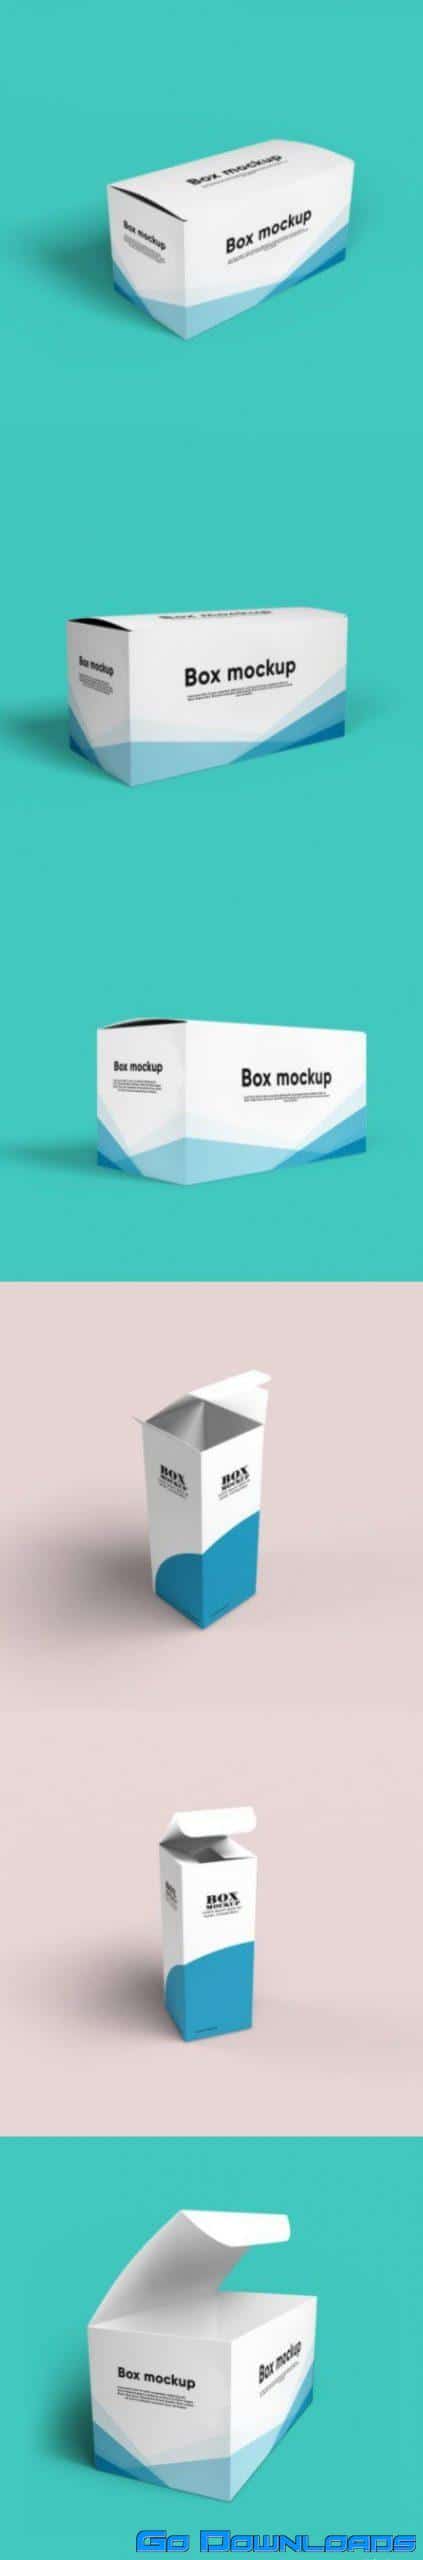 Package box mockup